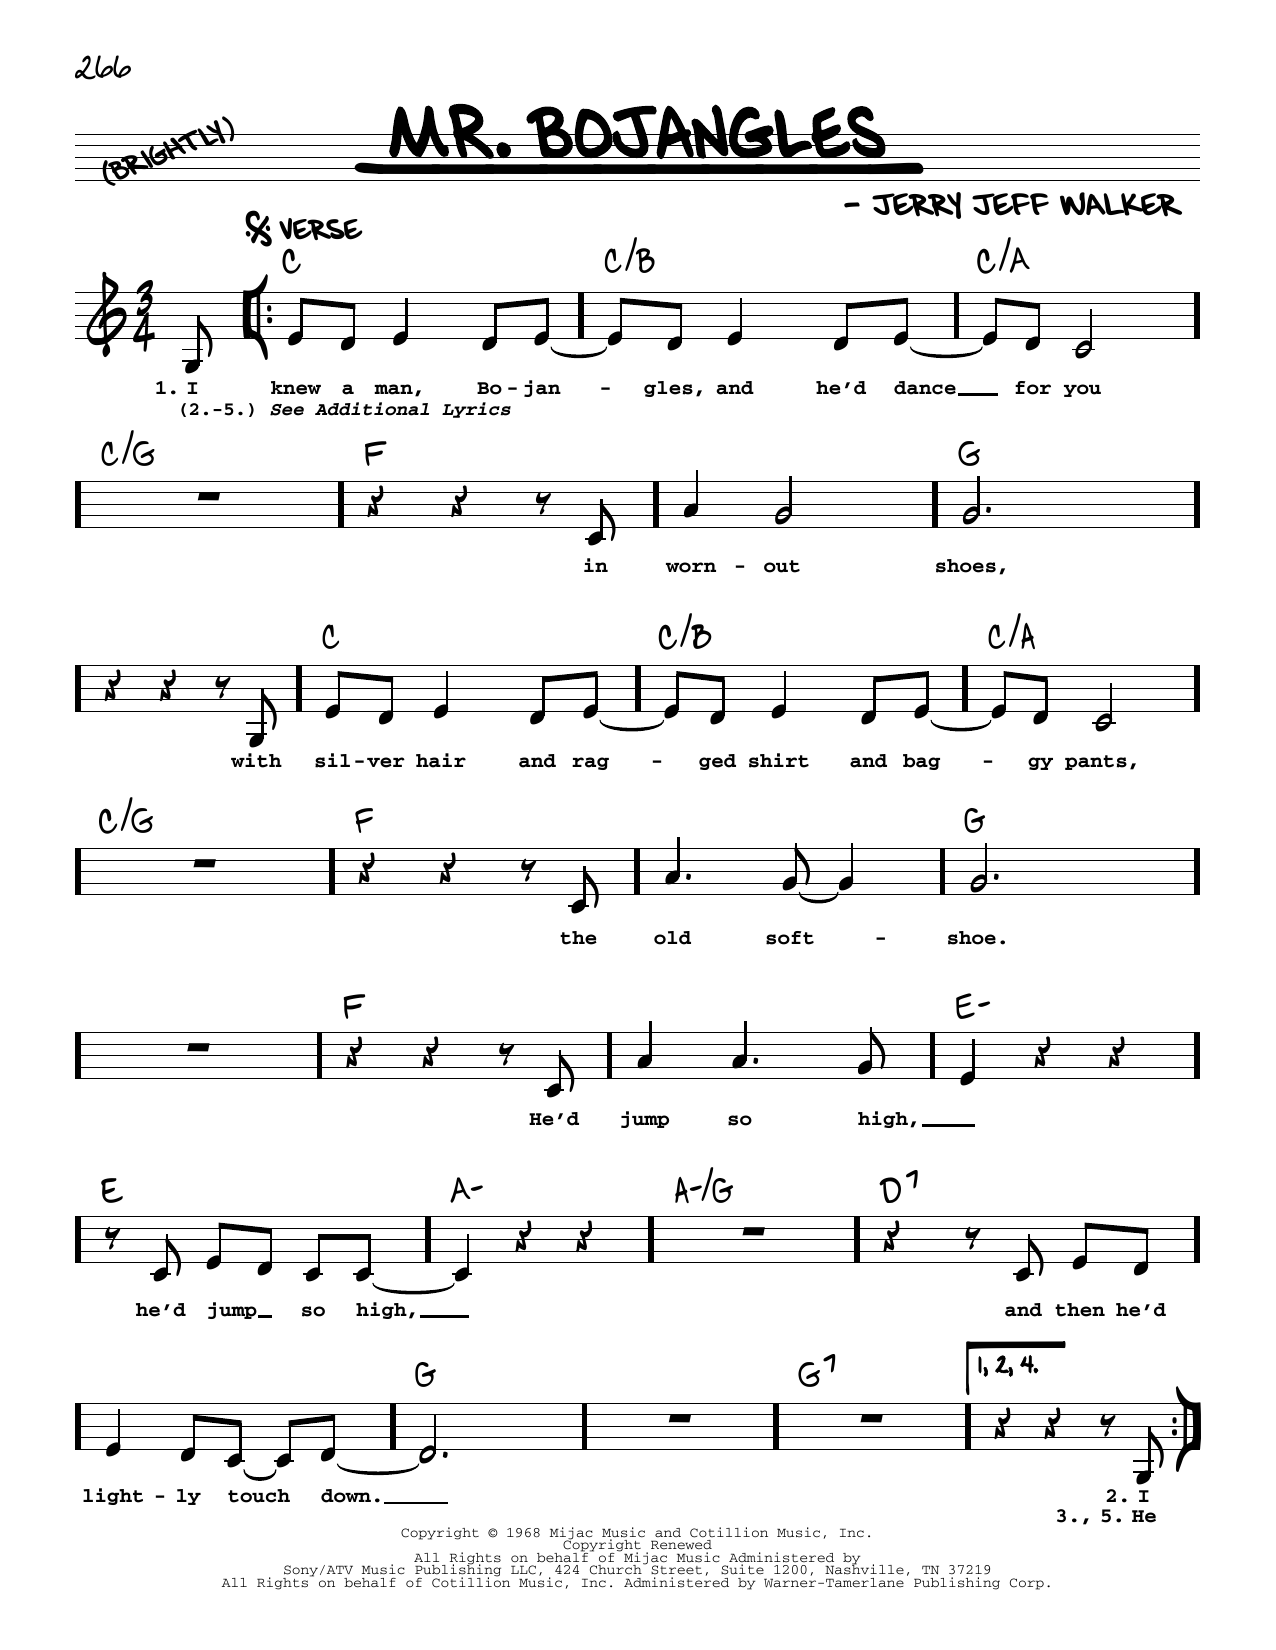 Sammy Davis Jr. Mr. Bojangles (Low Voice) Sheet Music Notes & Chords for Real Book – Melody, Lyrics & Chords - Download or Print PDF